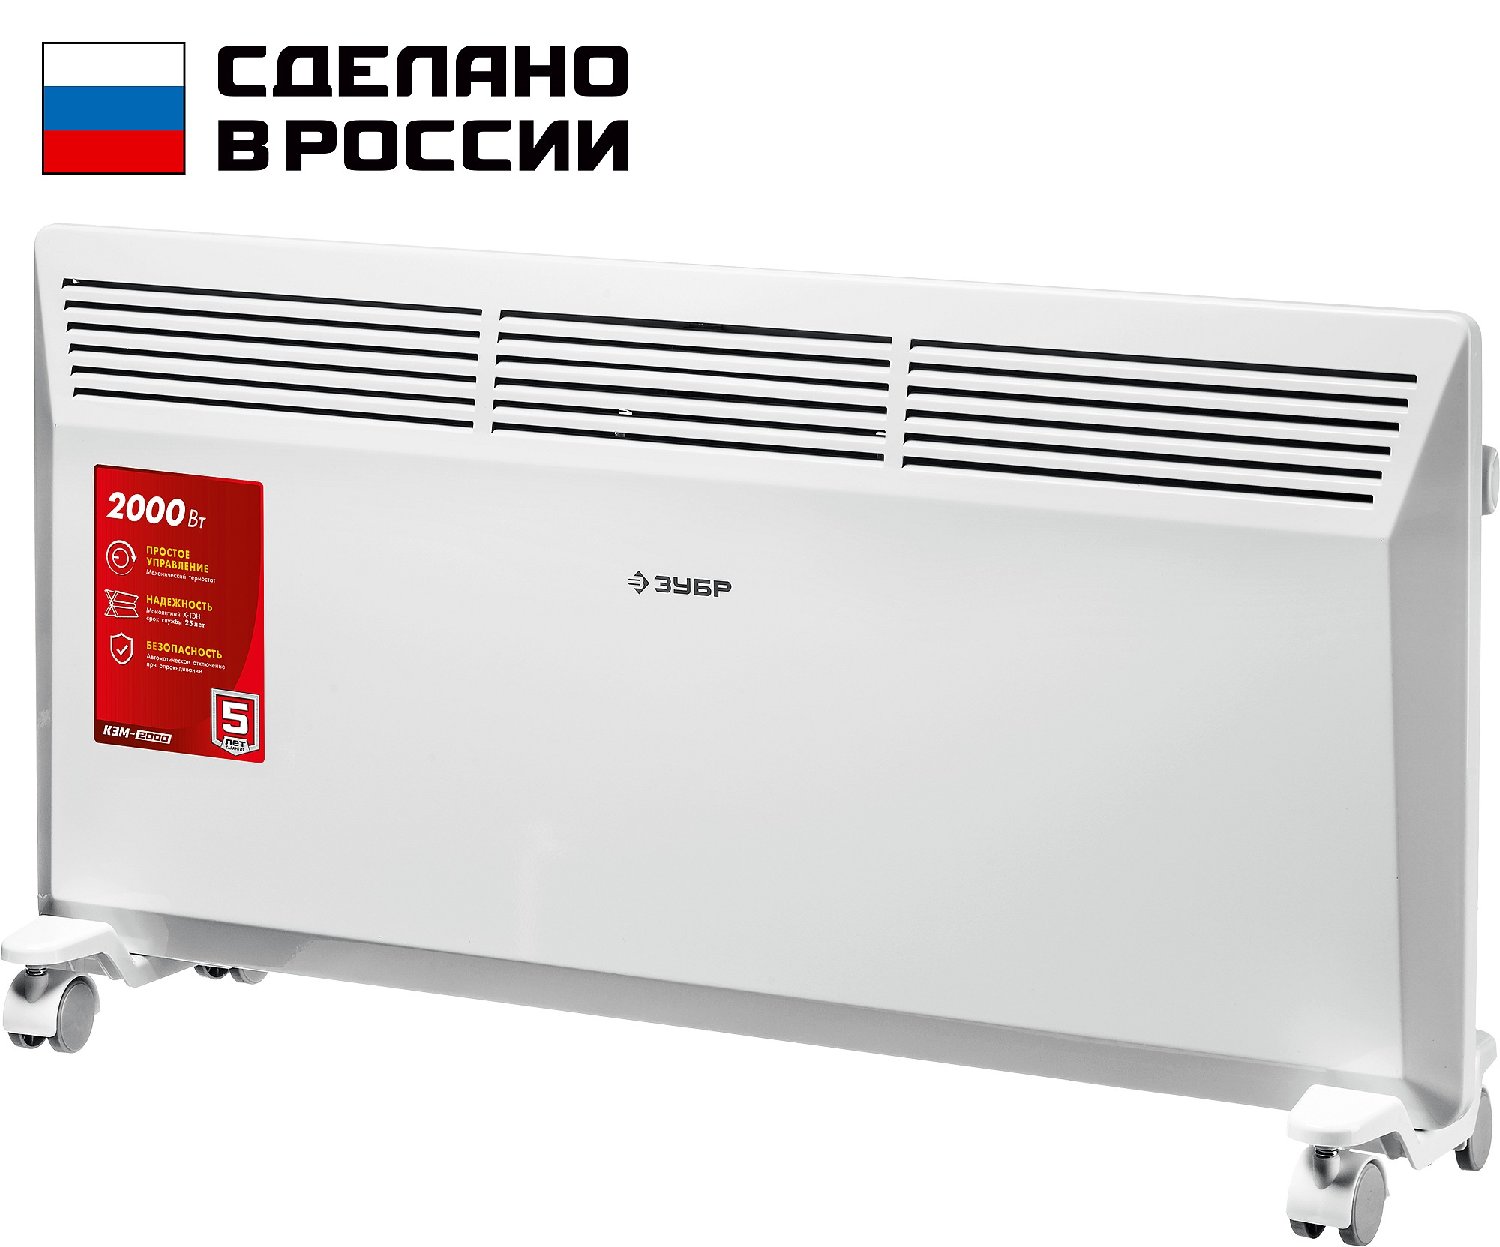 ЗУБР М серия 2 кВт, электрический конвектор () (КЭМ-2000)